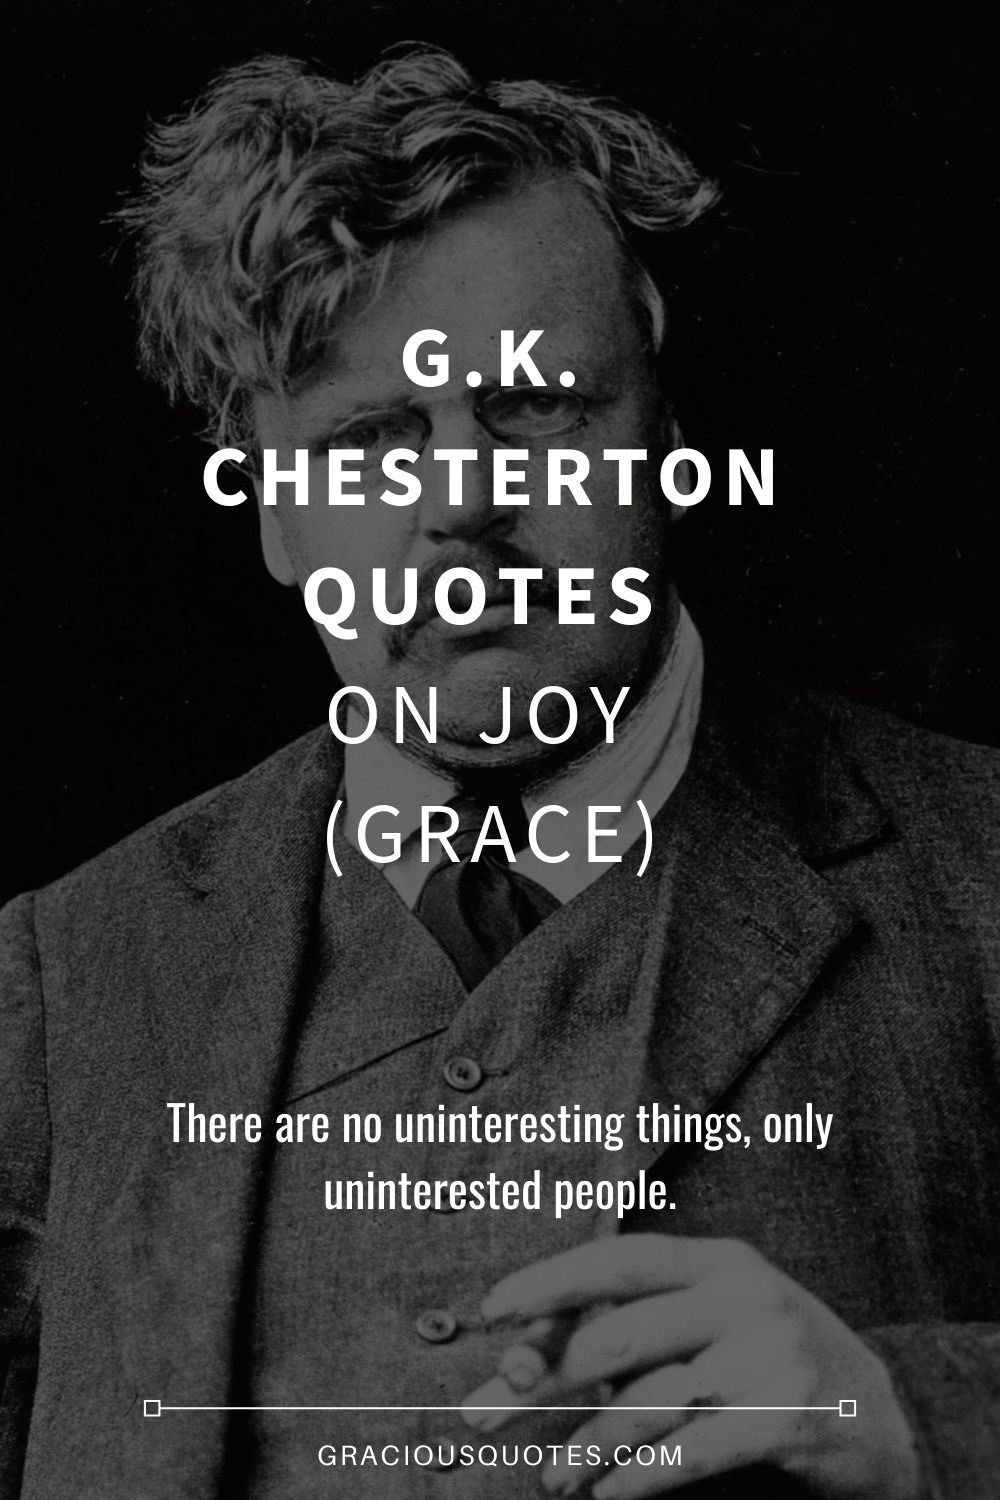 G.K. Chesterton Quotes on Joy (GRACE) - Gracious Quotes